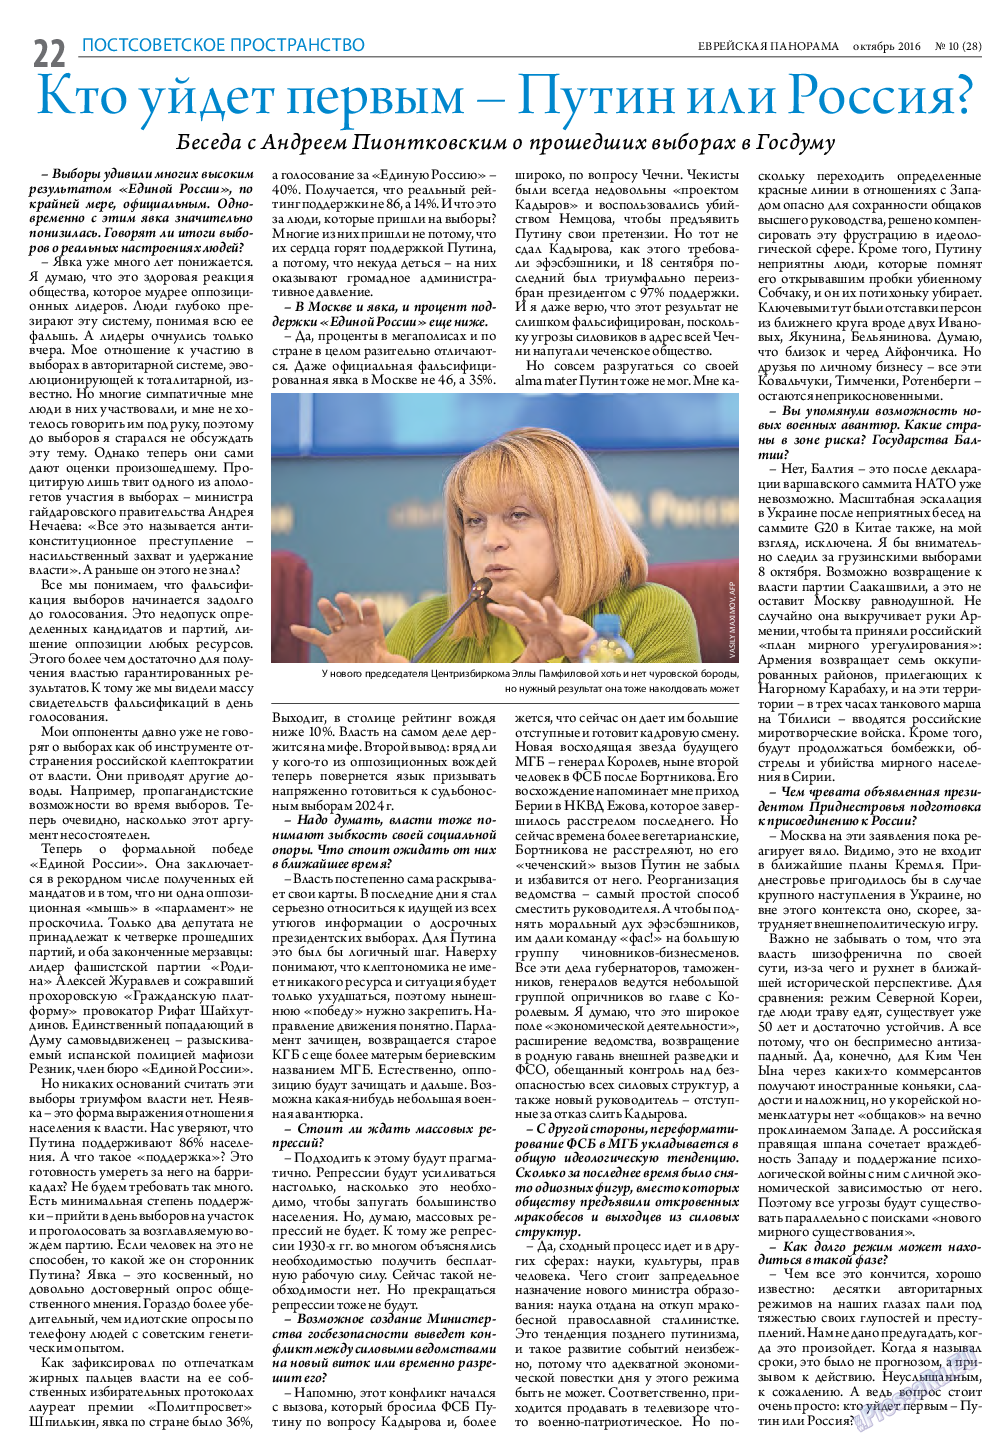 Еврейская панорама, газета. 2016 №10 стр.22